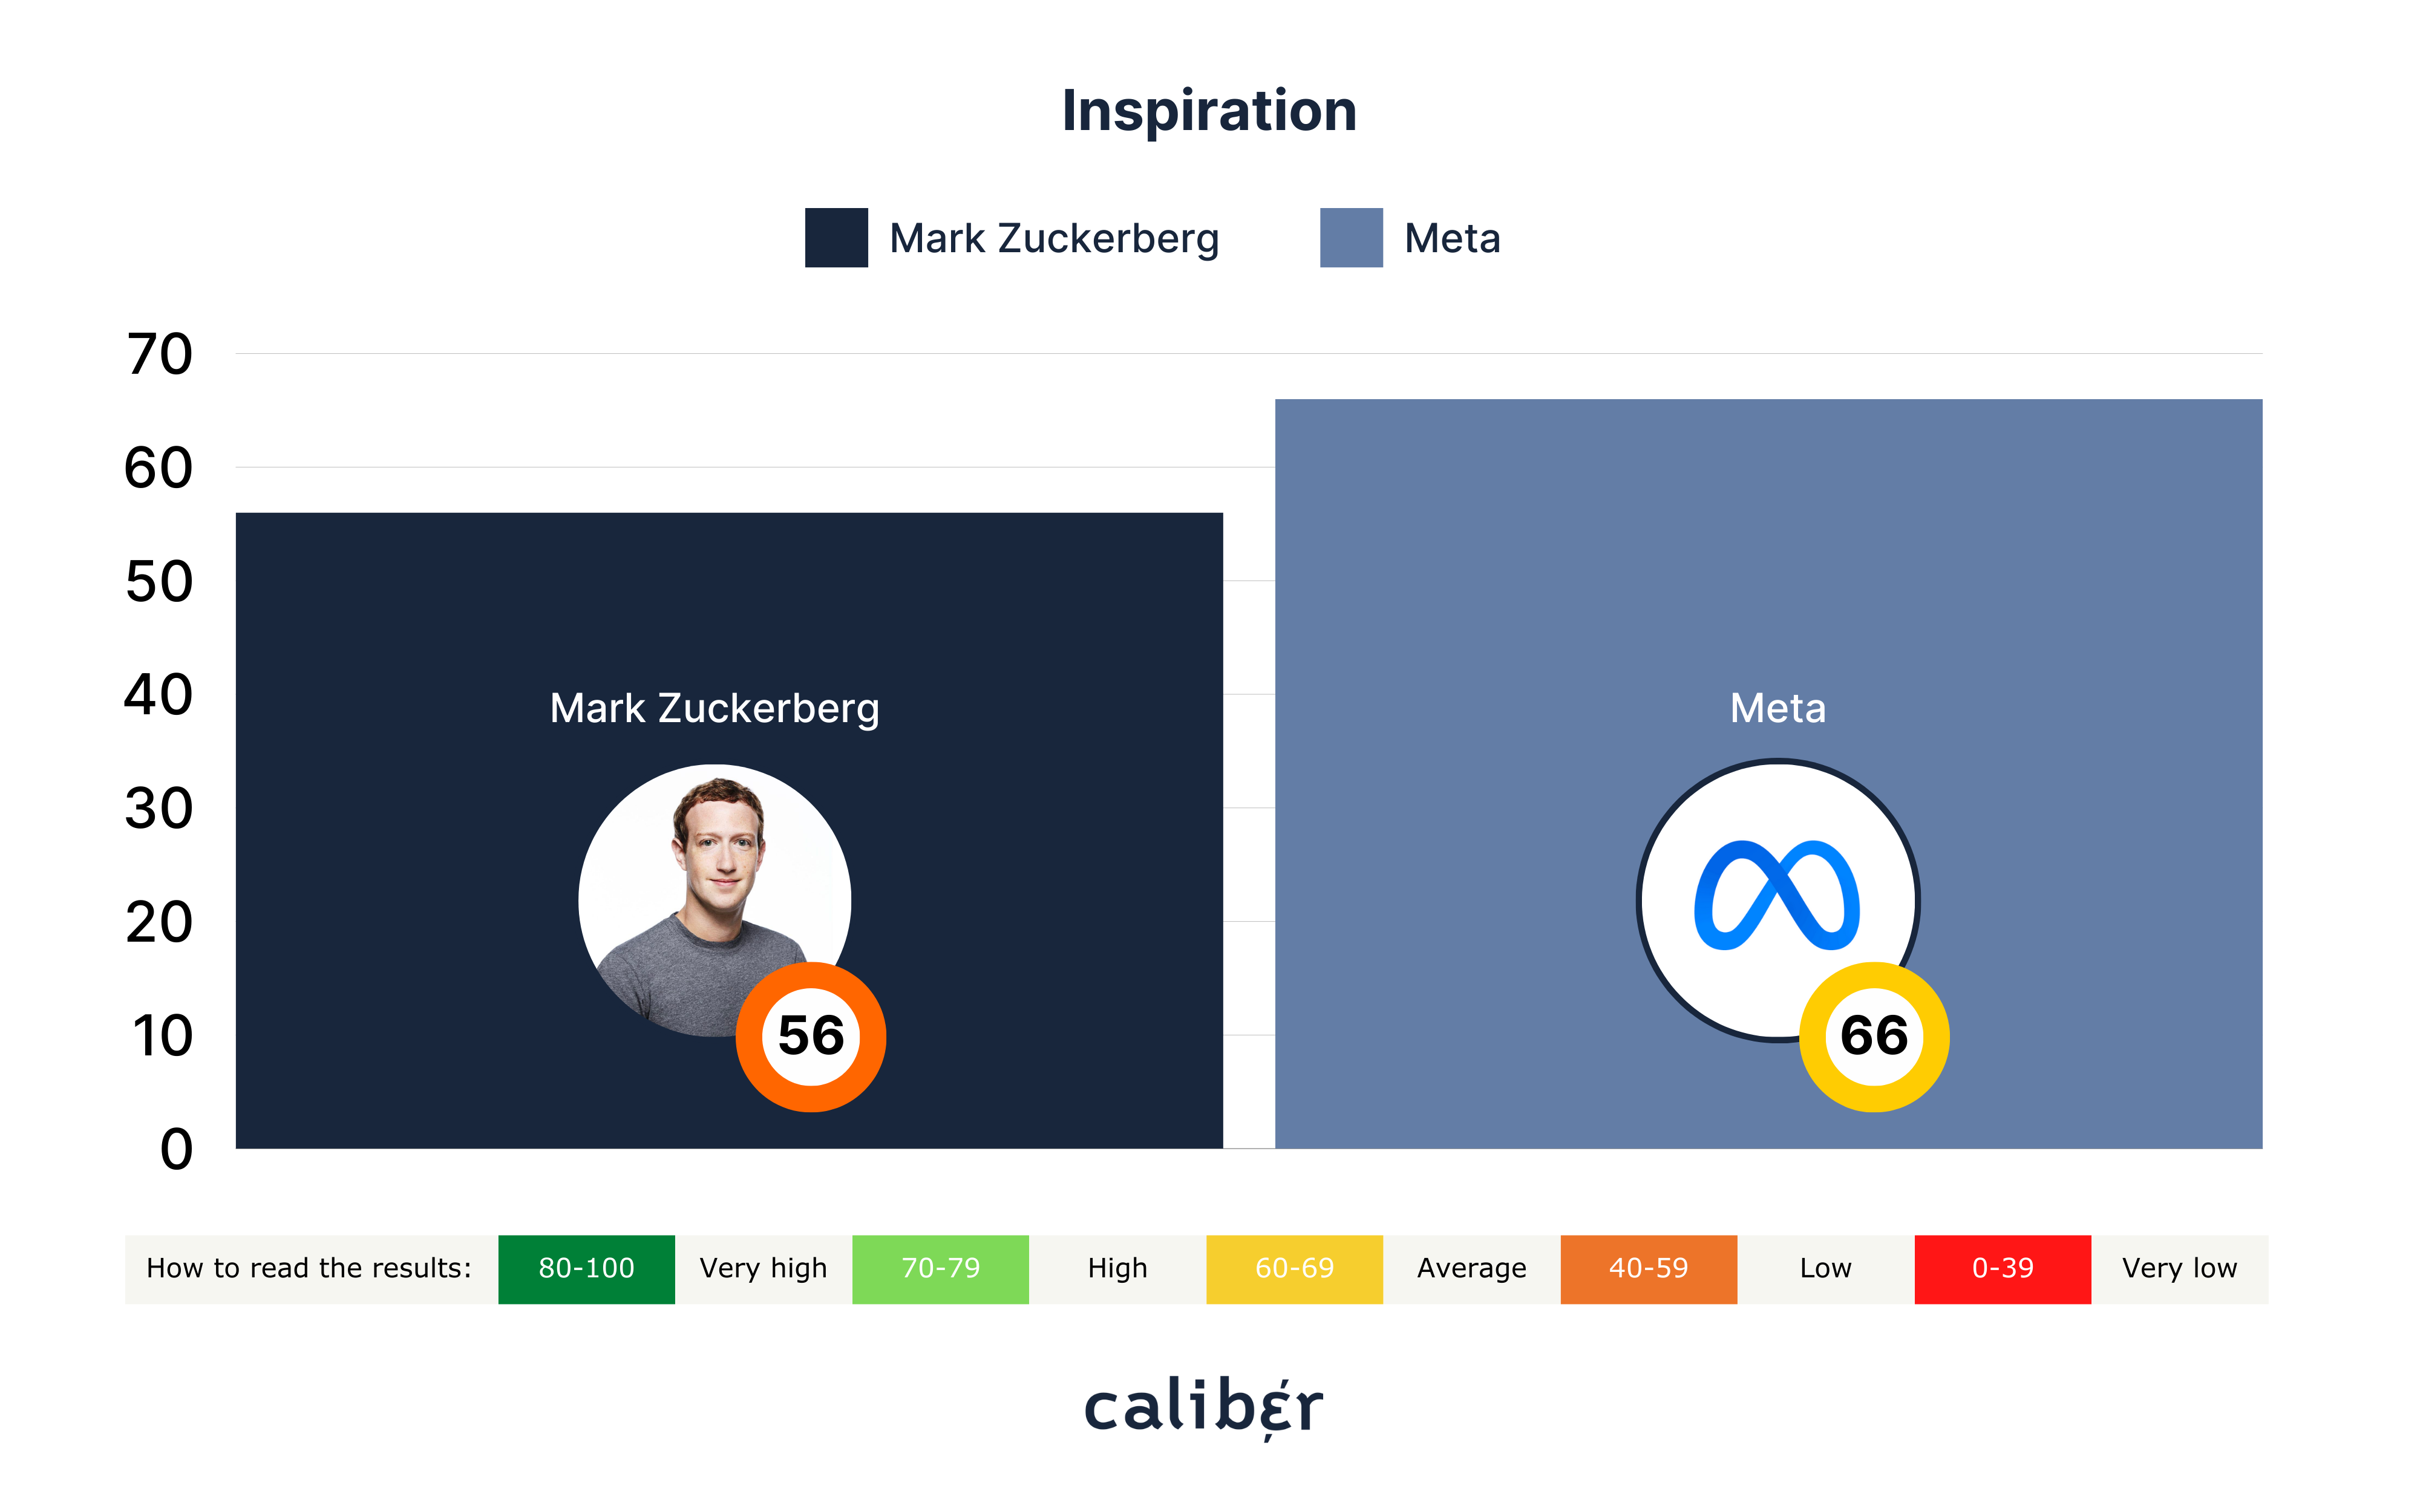 Mark Zuckerberg Inspiration Score